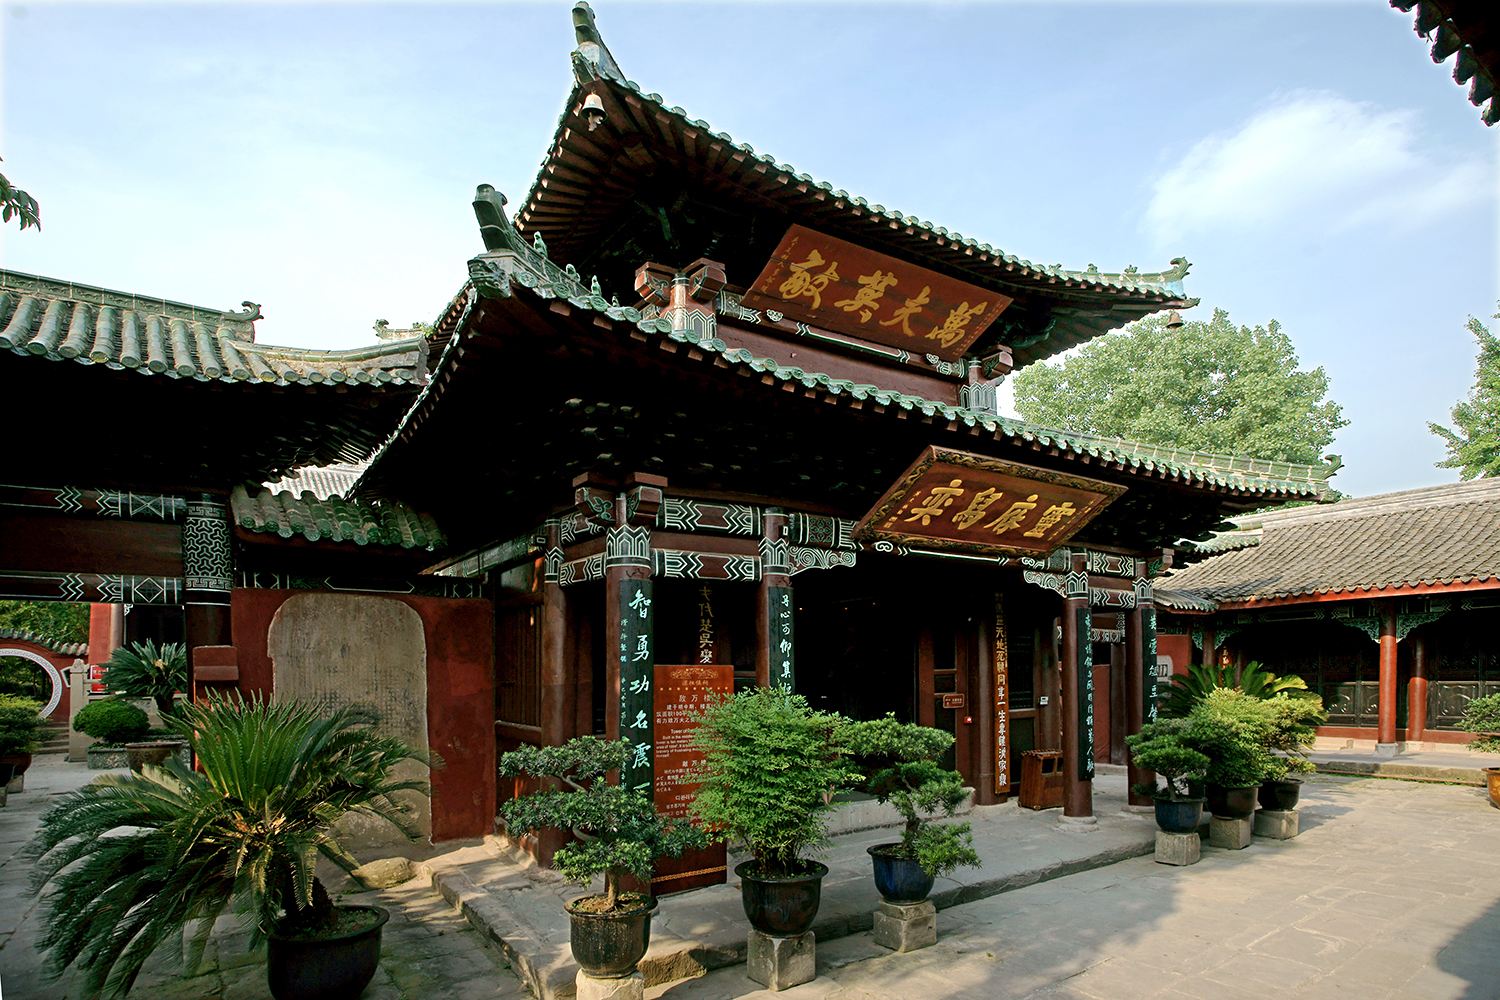 Zhangfei temple